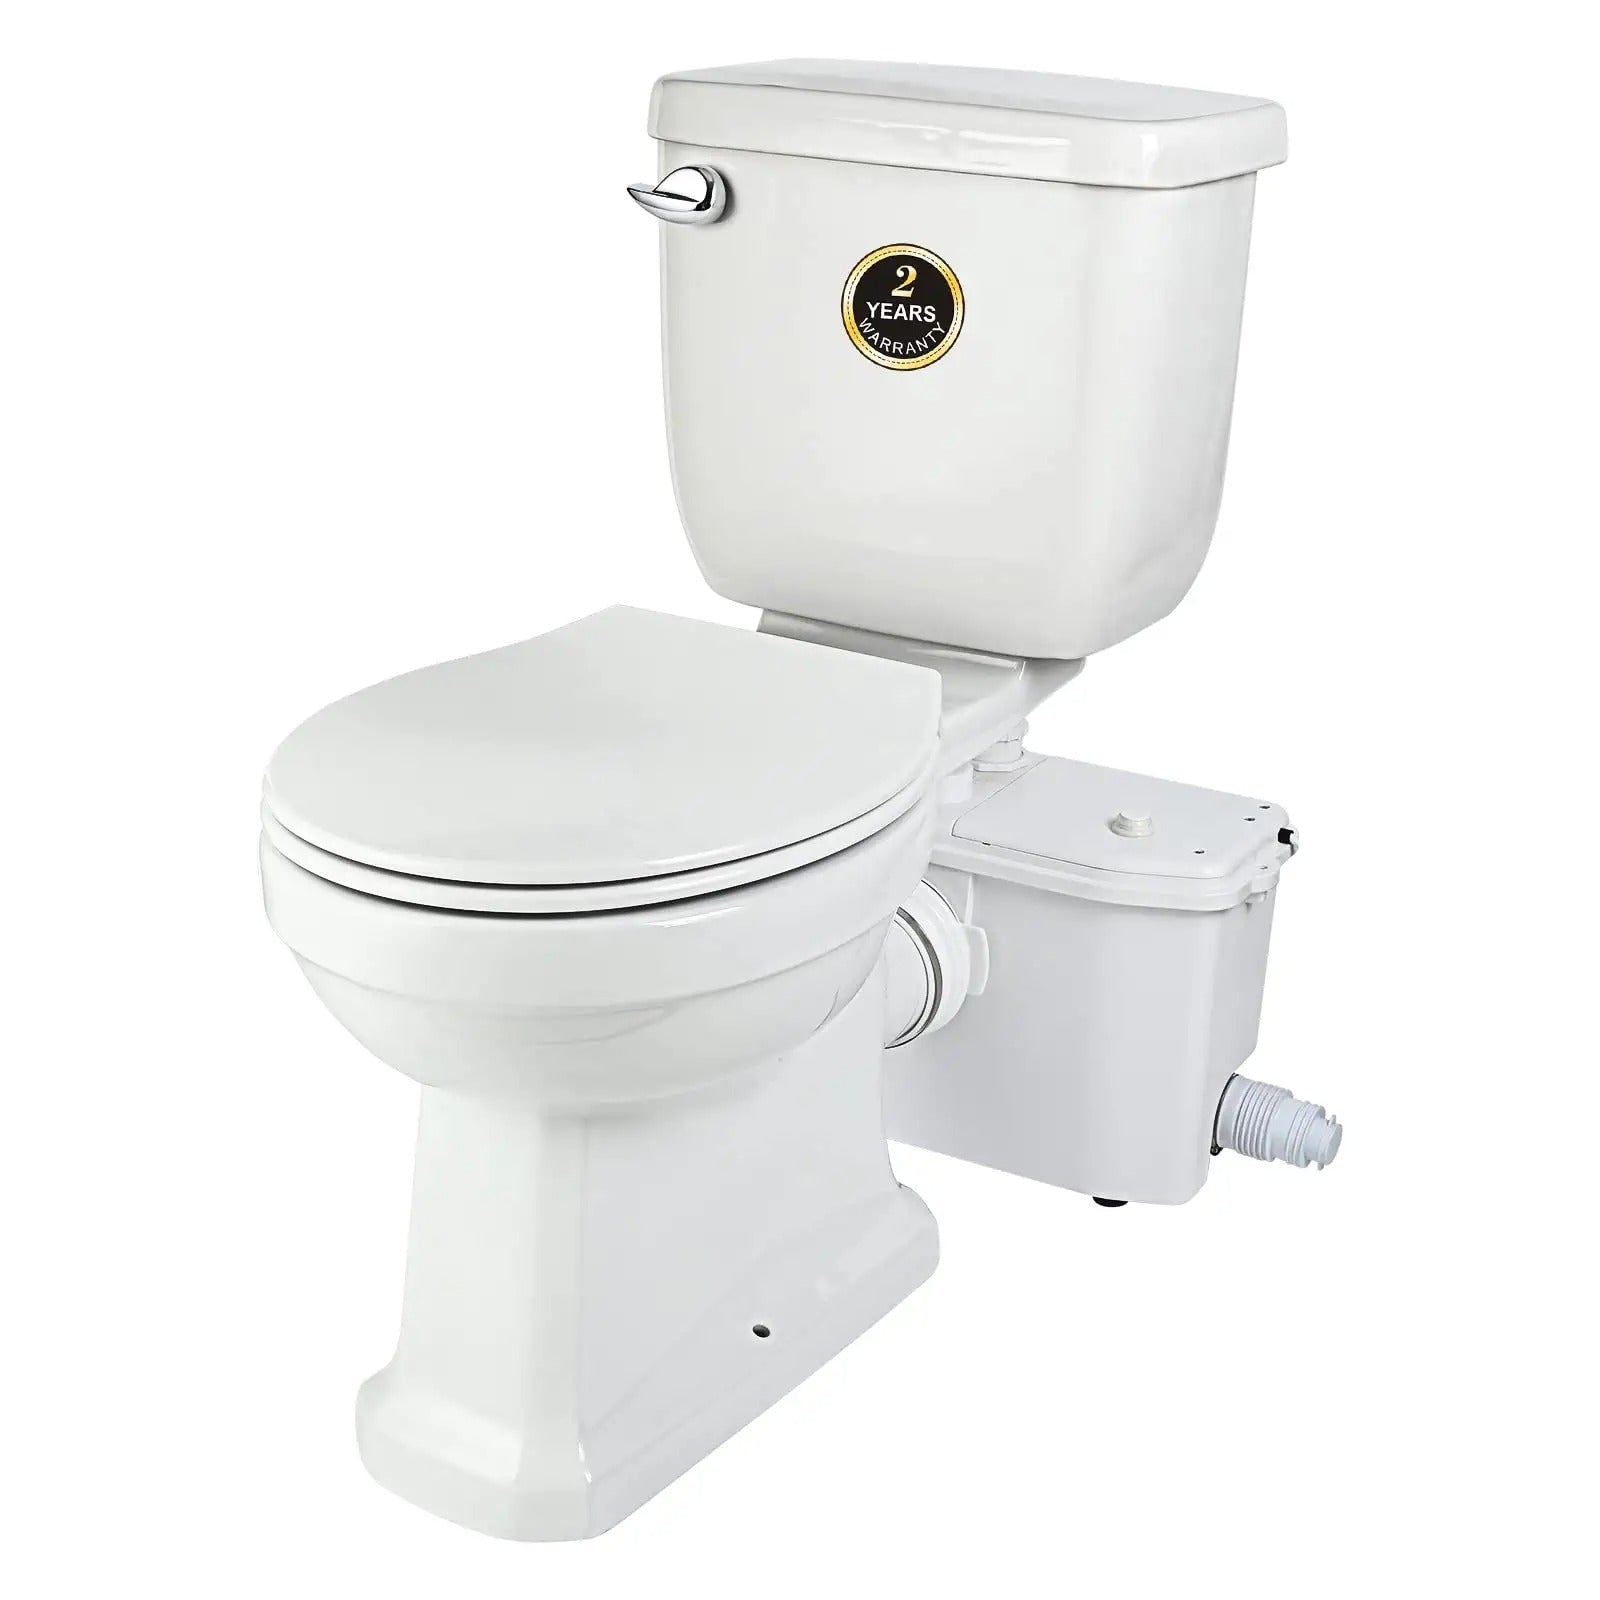 Macerating Toilet with 700 Watt Macerator Pump, Round Bowl and